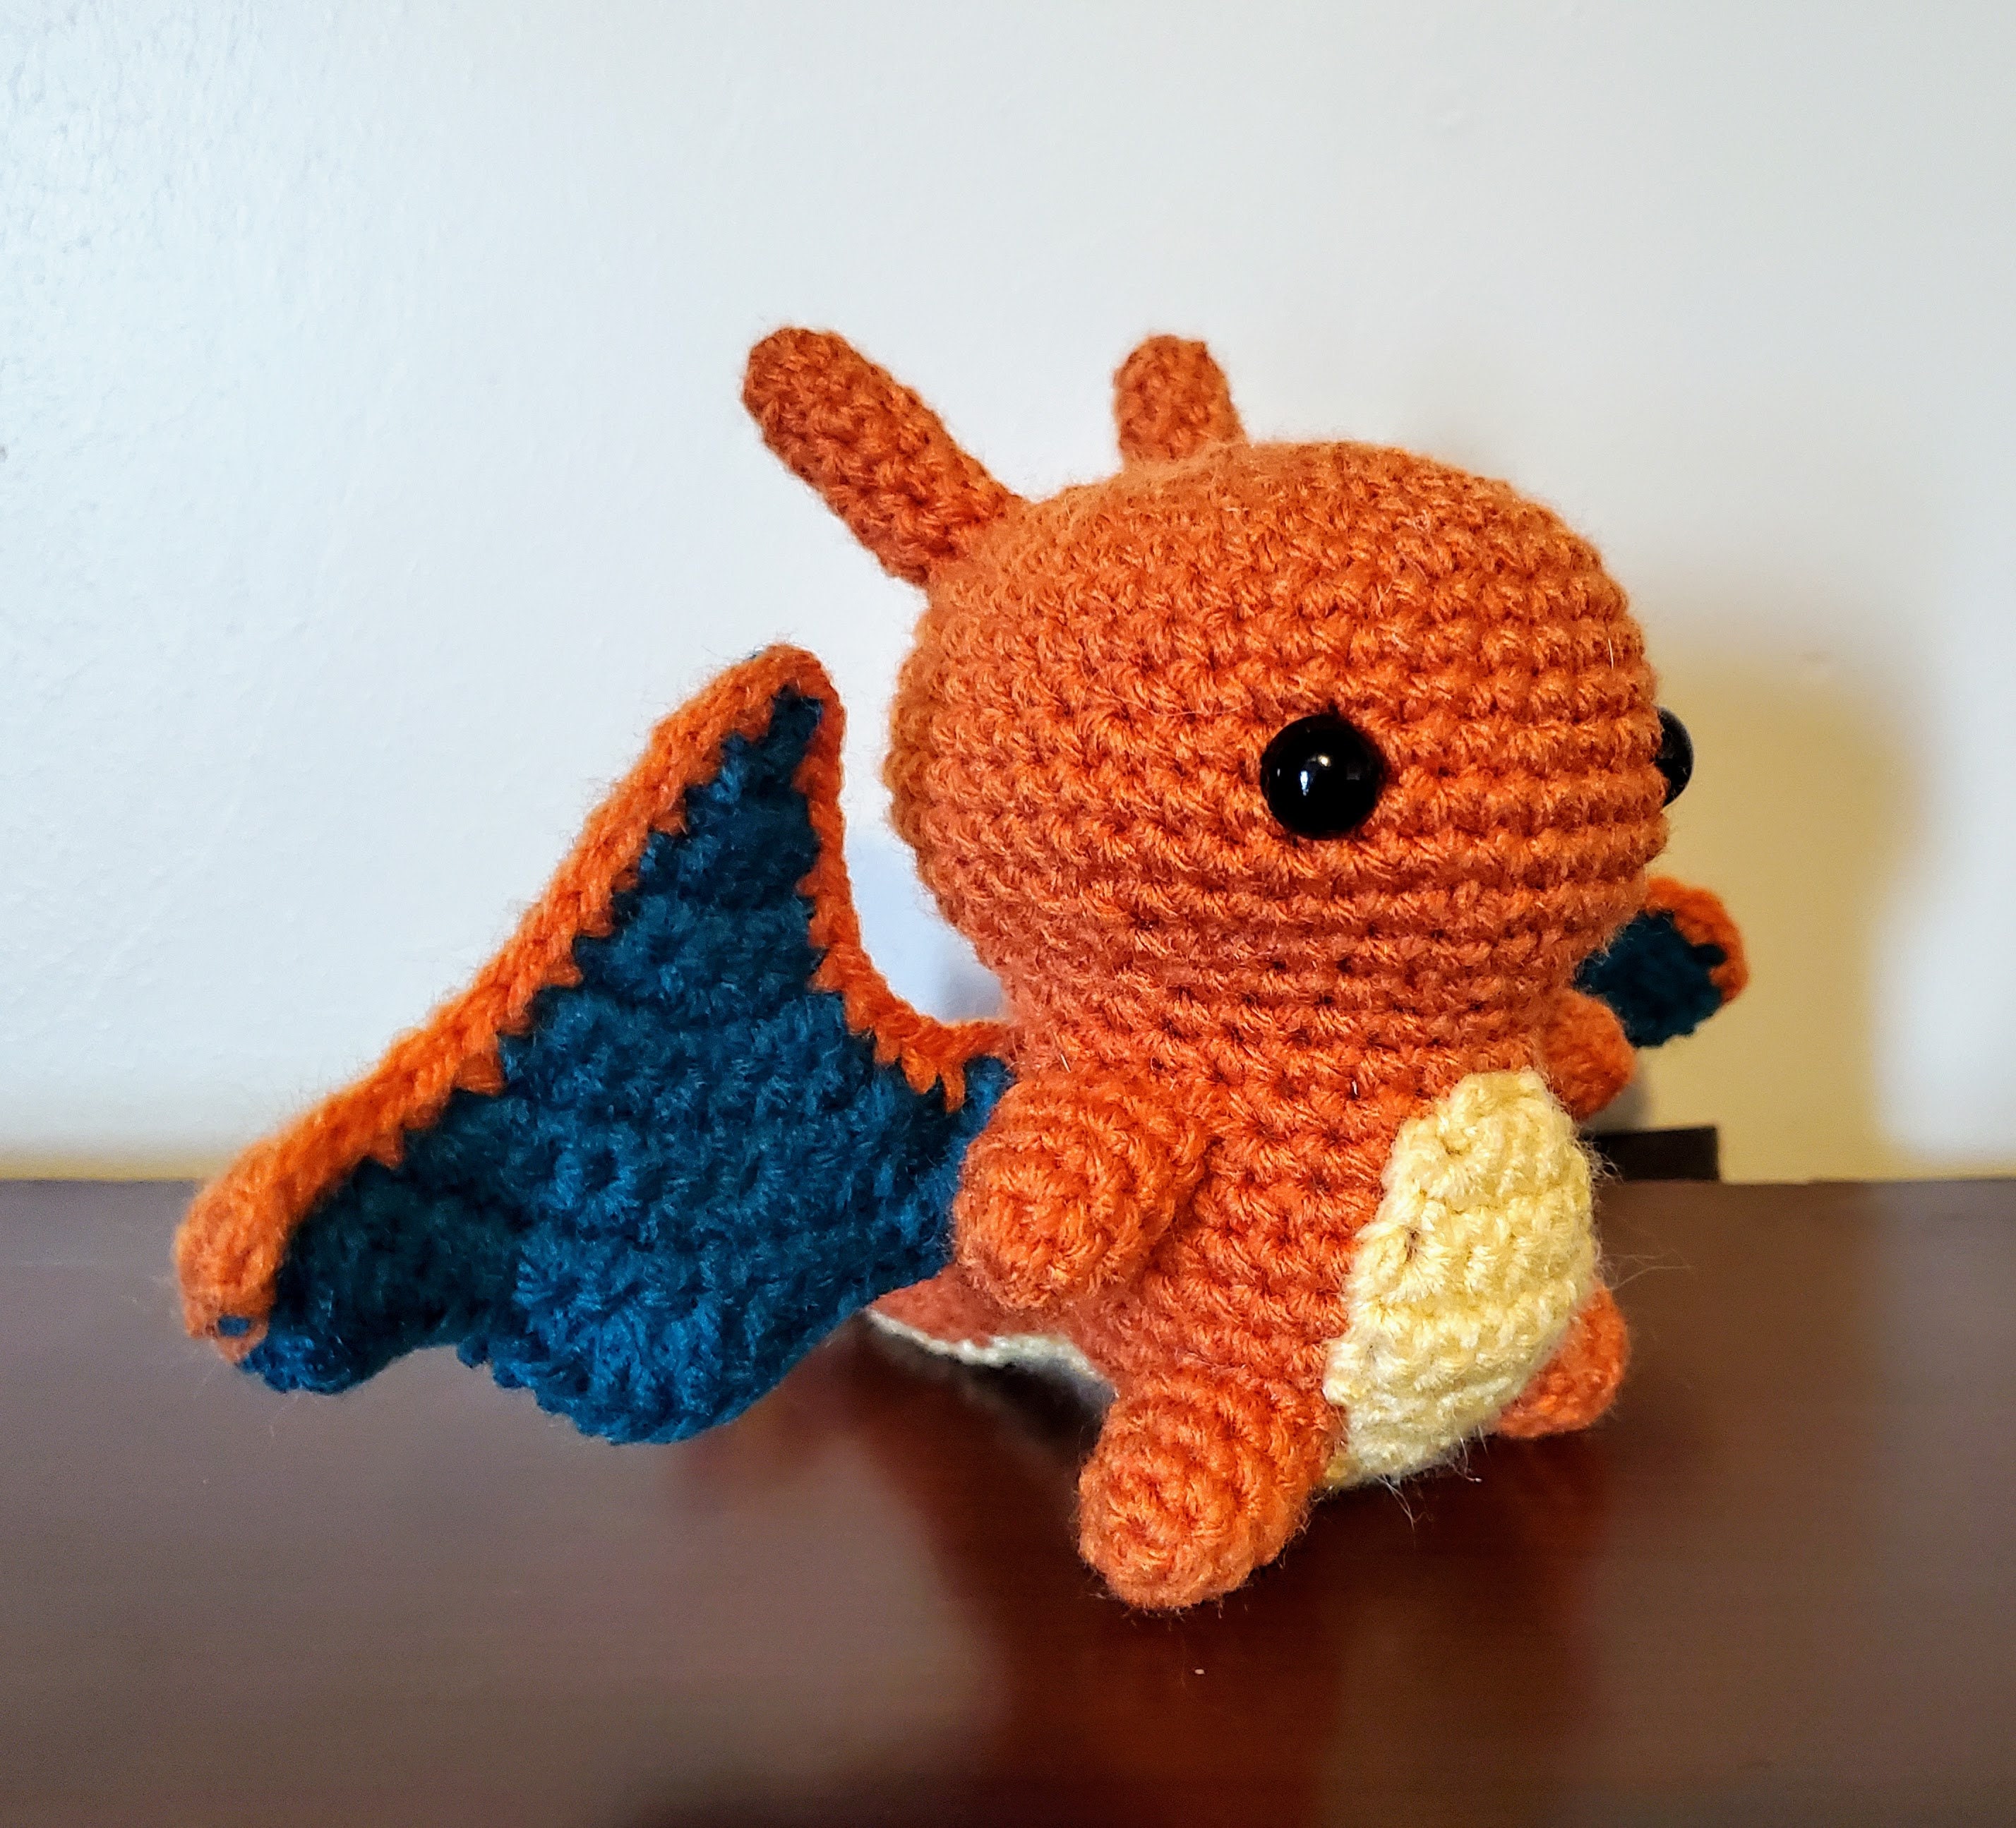 Charizard - 4” Handmade Pokémon Amigurumi Crochet Plush